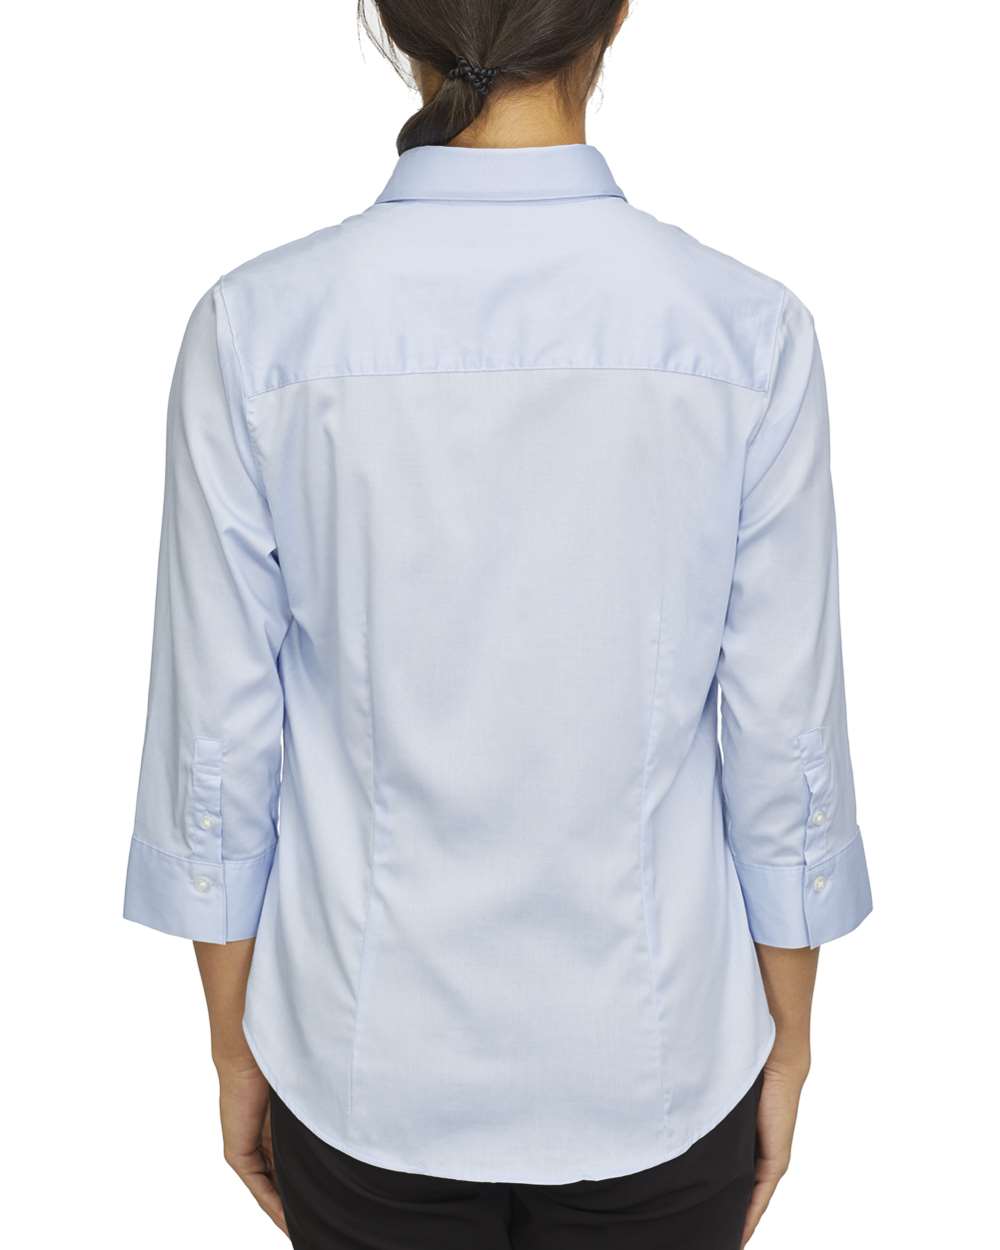 Van Heusen Women's Three-Quarter Sleeve Twill Shirt 18CV304 #color_English Blue